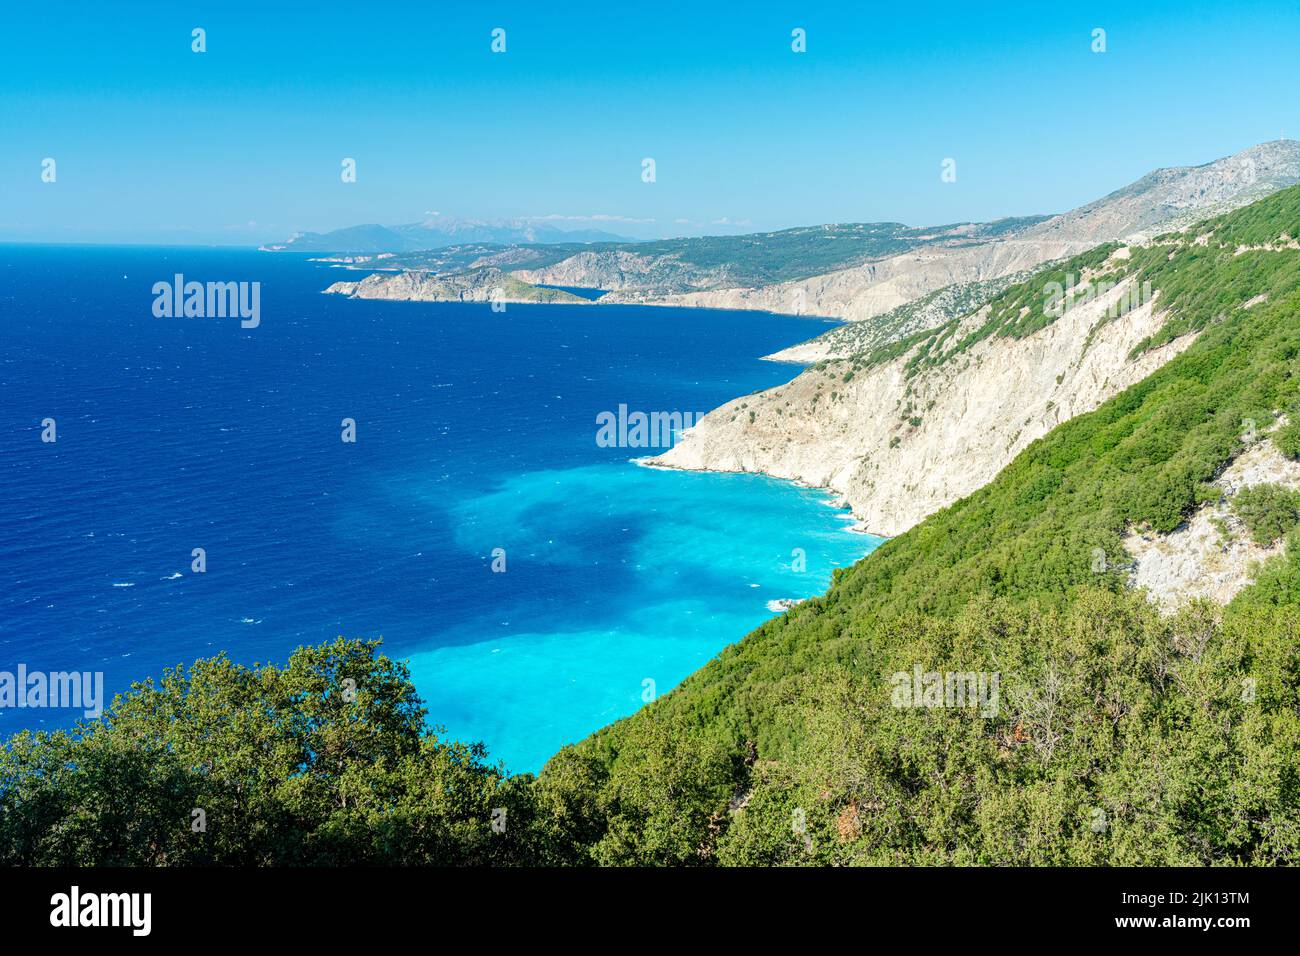 High angle view of Myrtos beach and turquoise sea from coastline, Kefalonia, Ionian Islands, Greek Islands, Greece, Europe Stock Photo